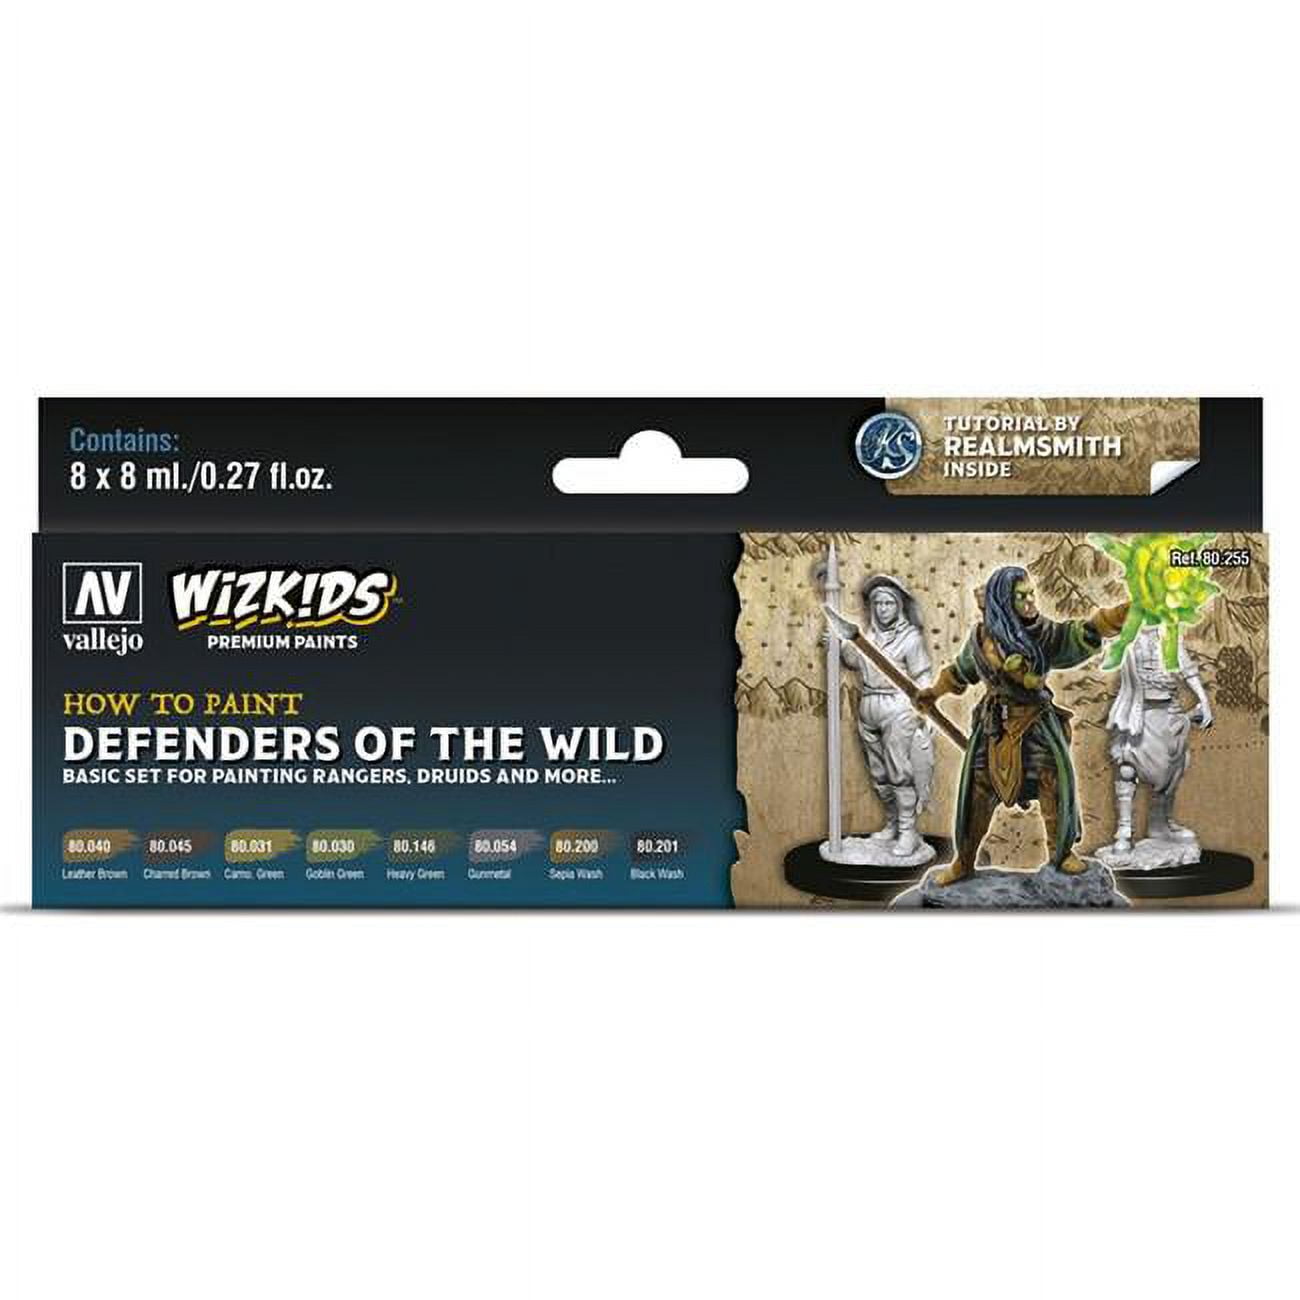 Picture of Acrylicos Vallejo VJP80255 WizKids Premium - Defenders of the Wild Paint Set